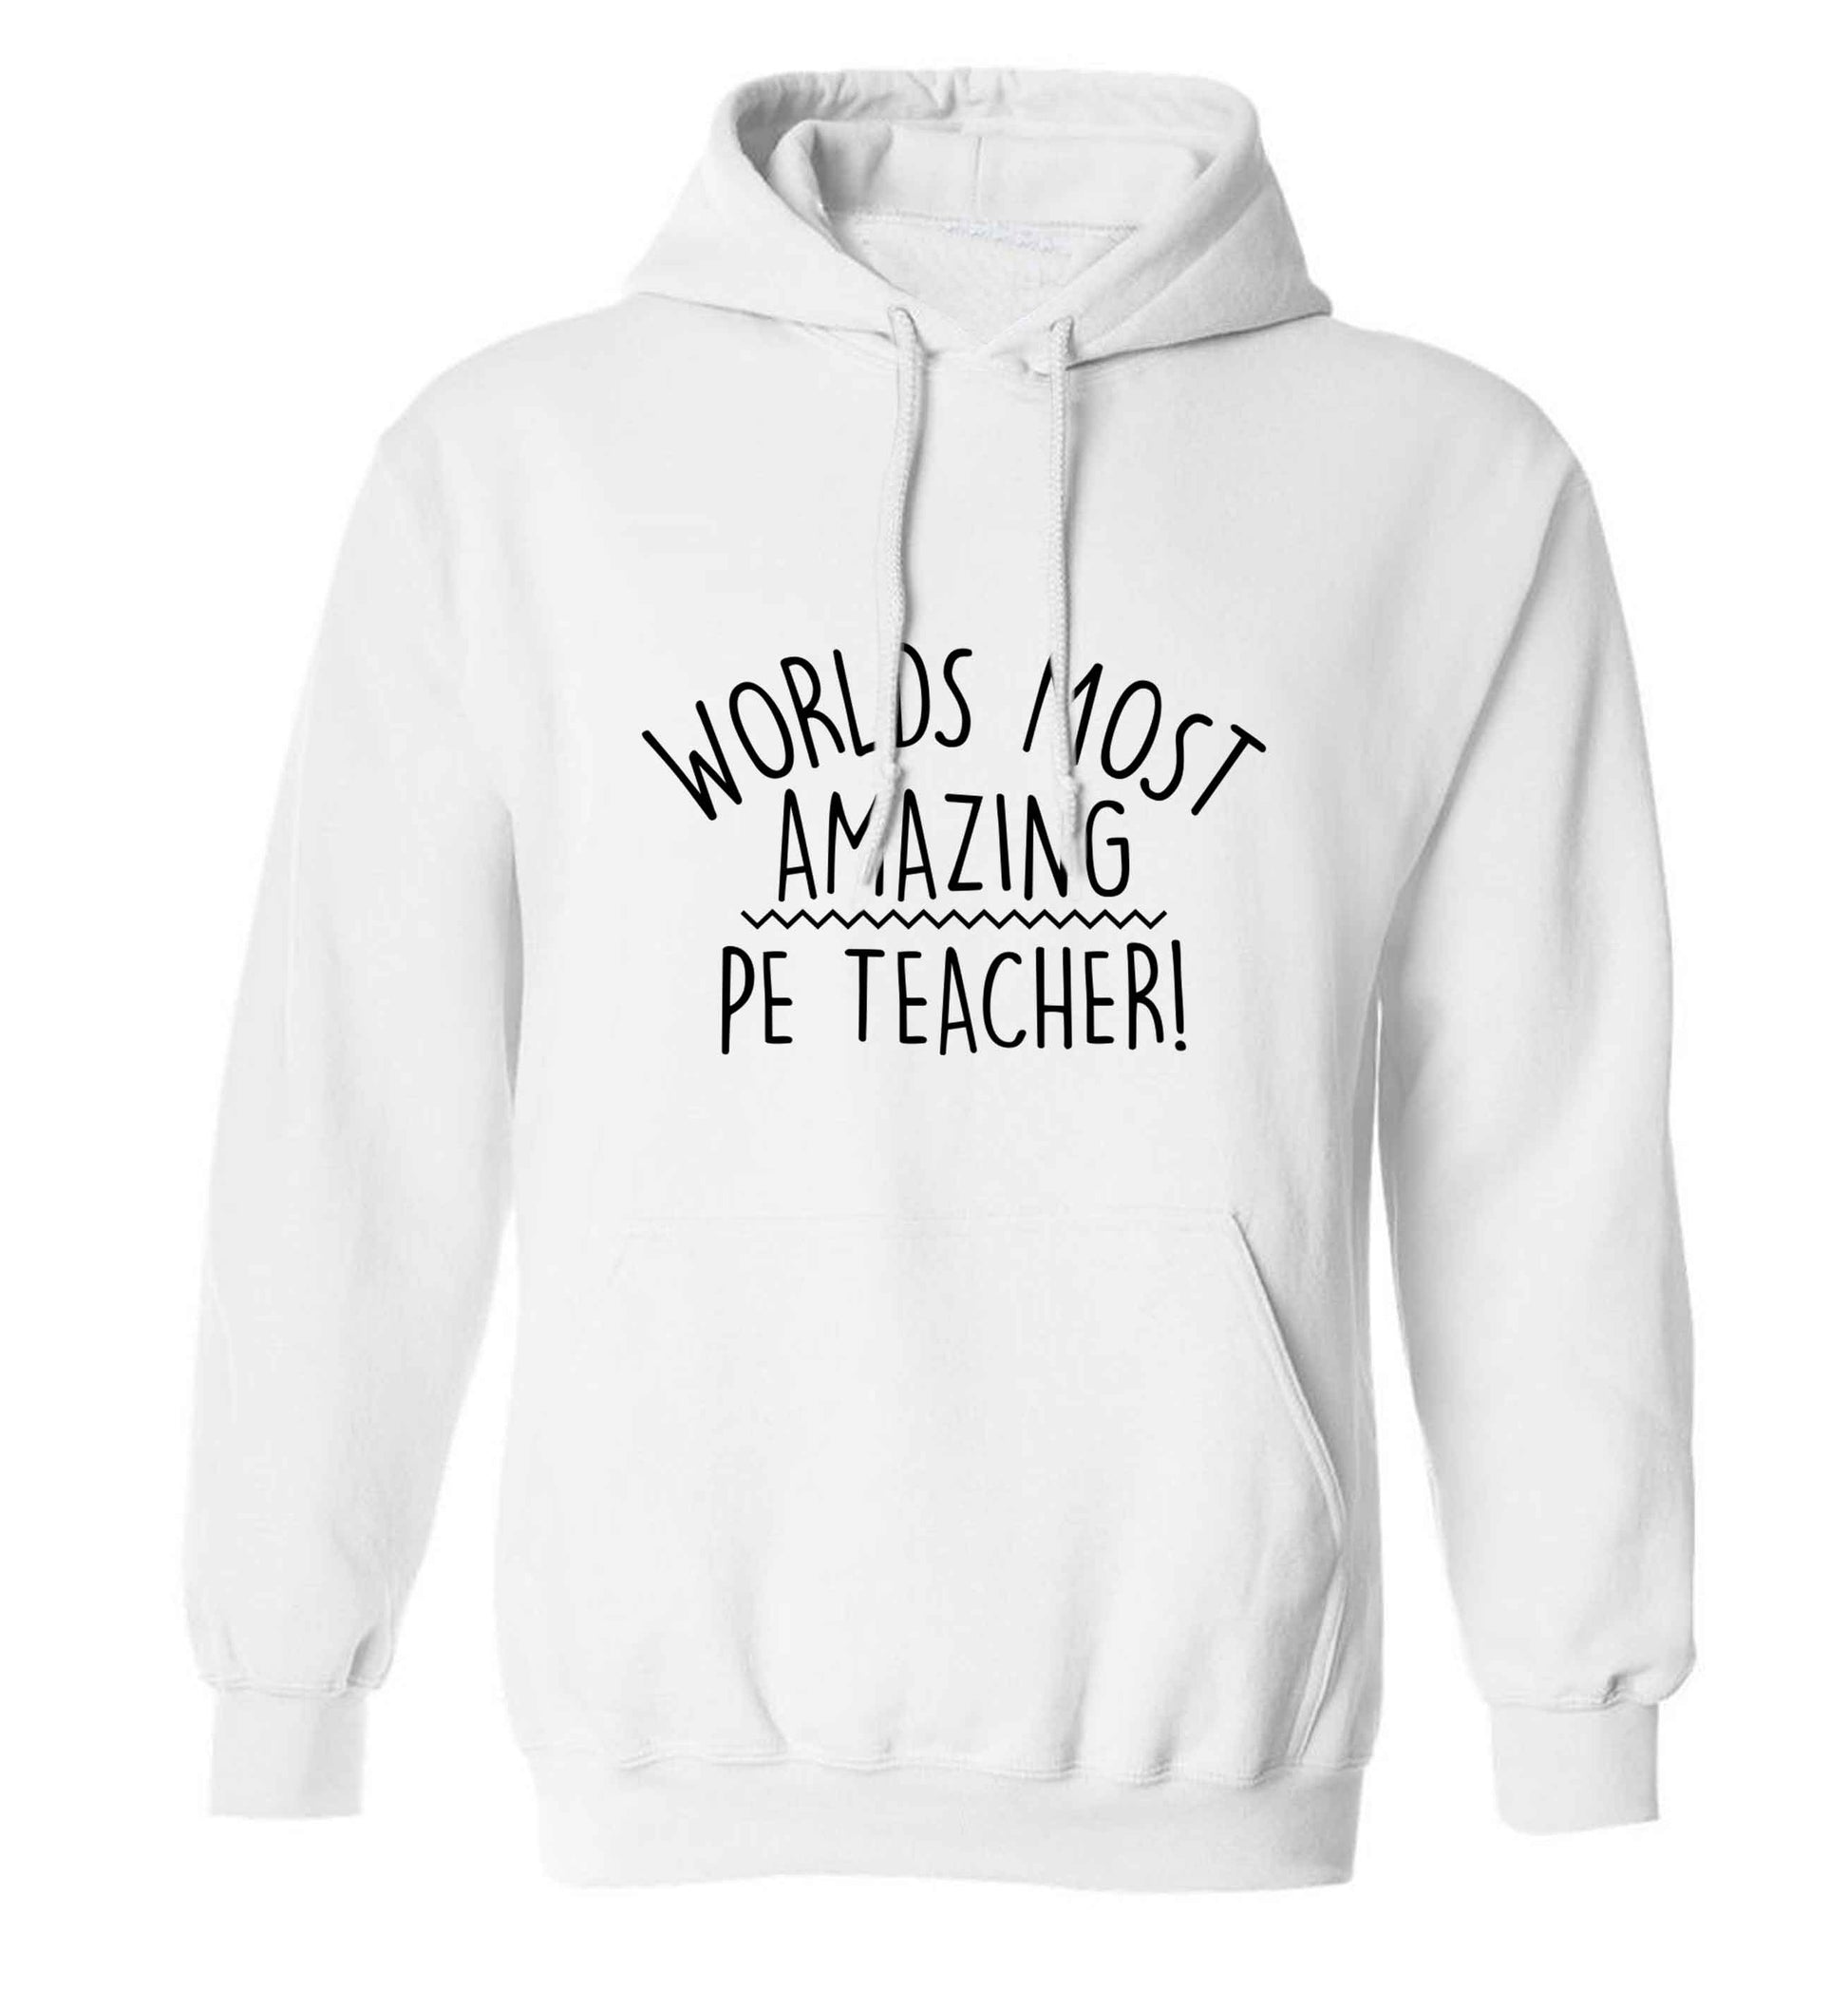 Worlds most amazing PE teacher adults unisex white hoodie 2XL